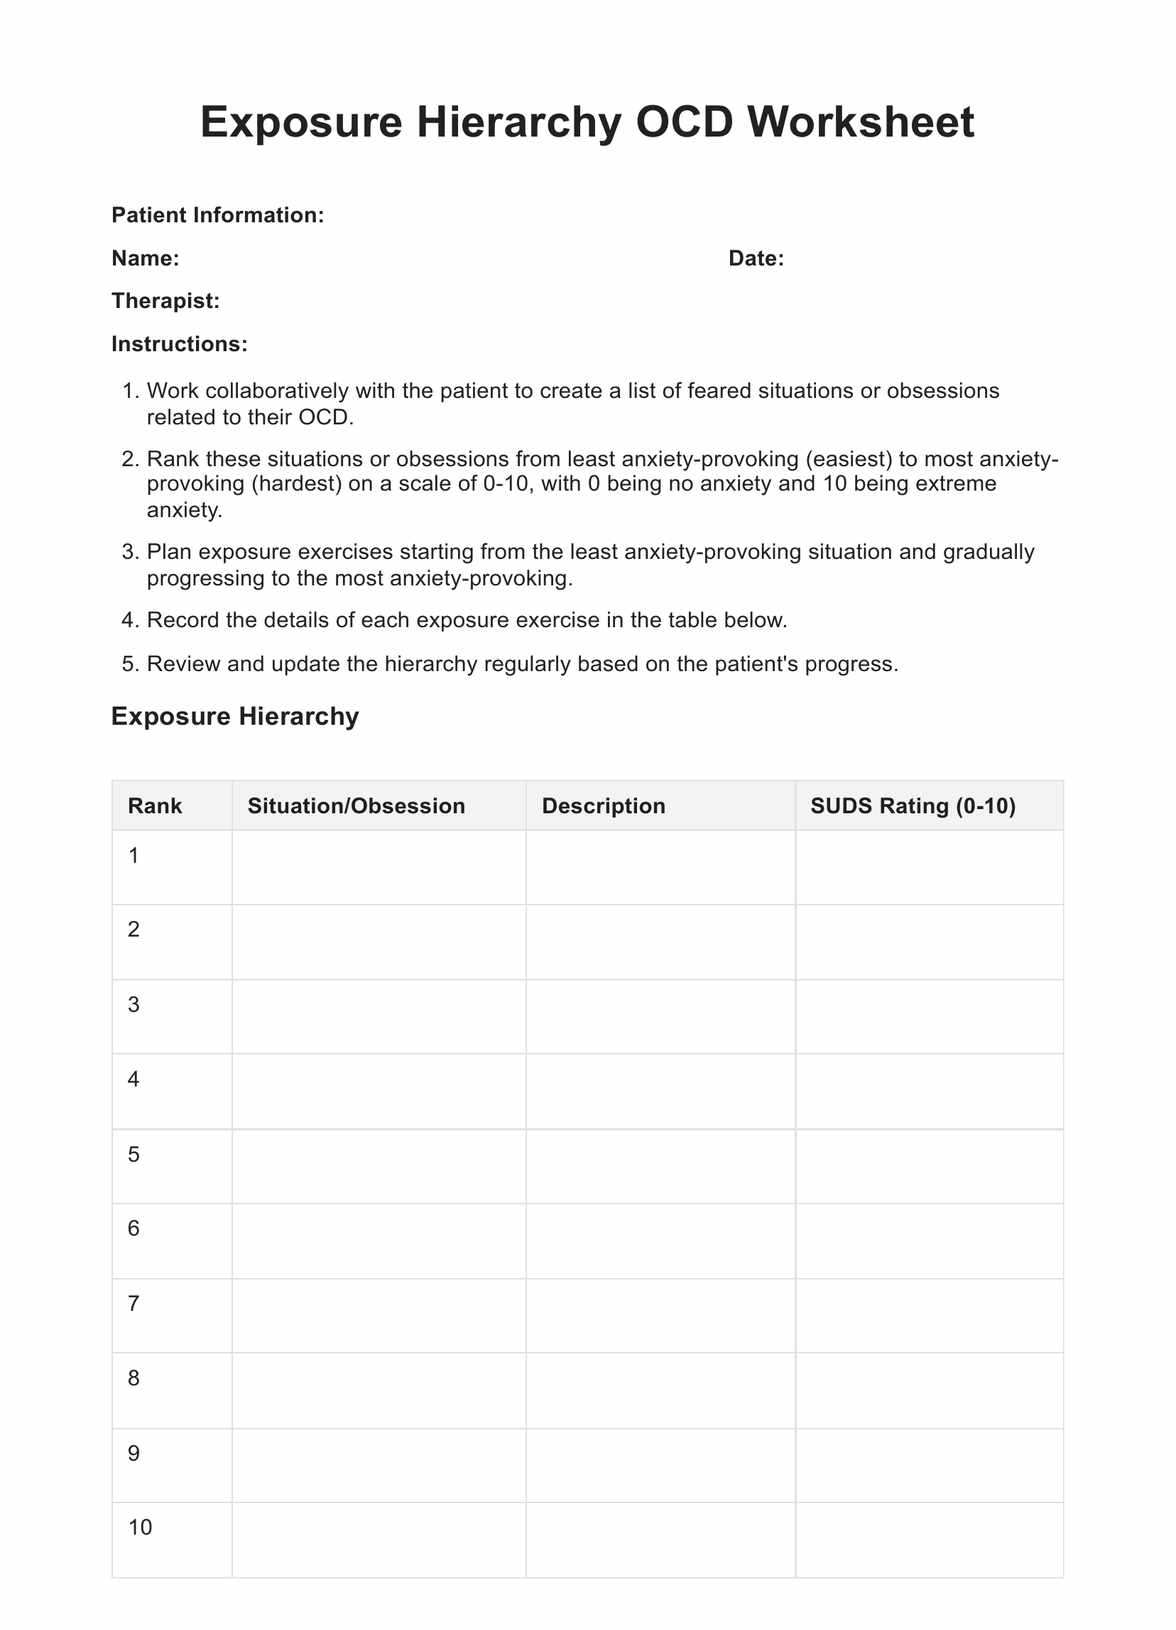 Exposure Hierarchy OCD Worksheet PDF Example